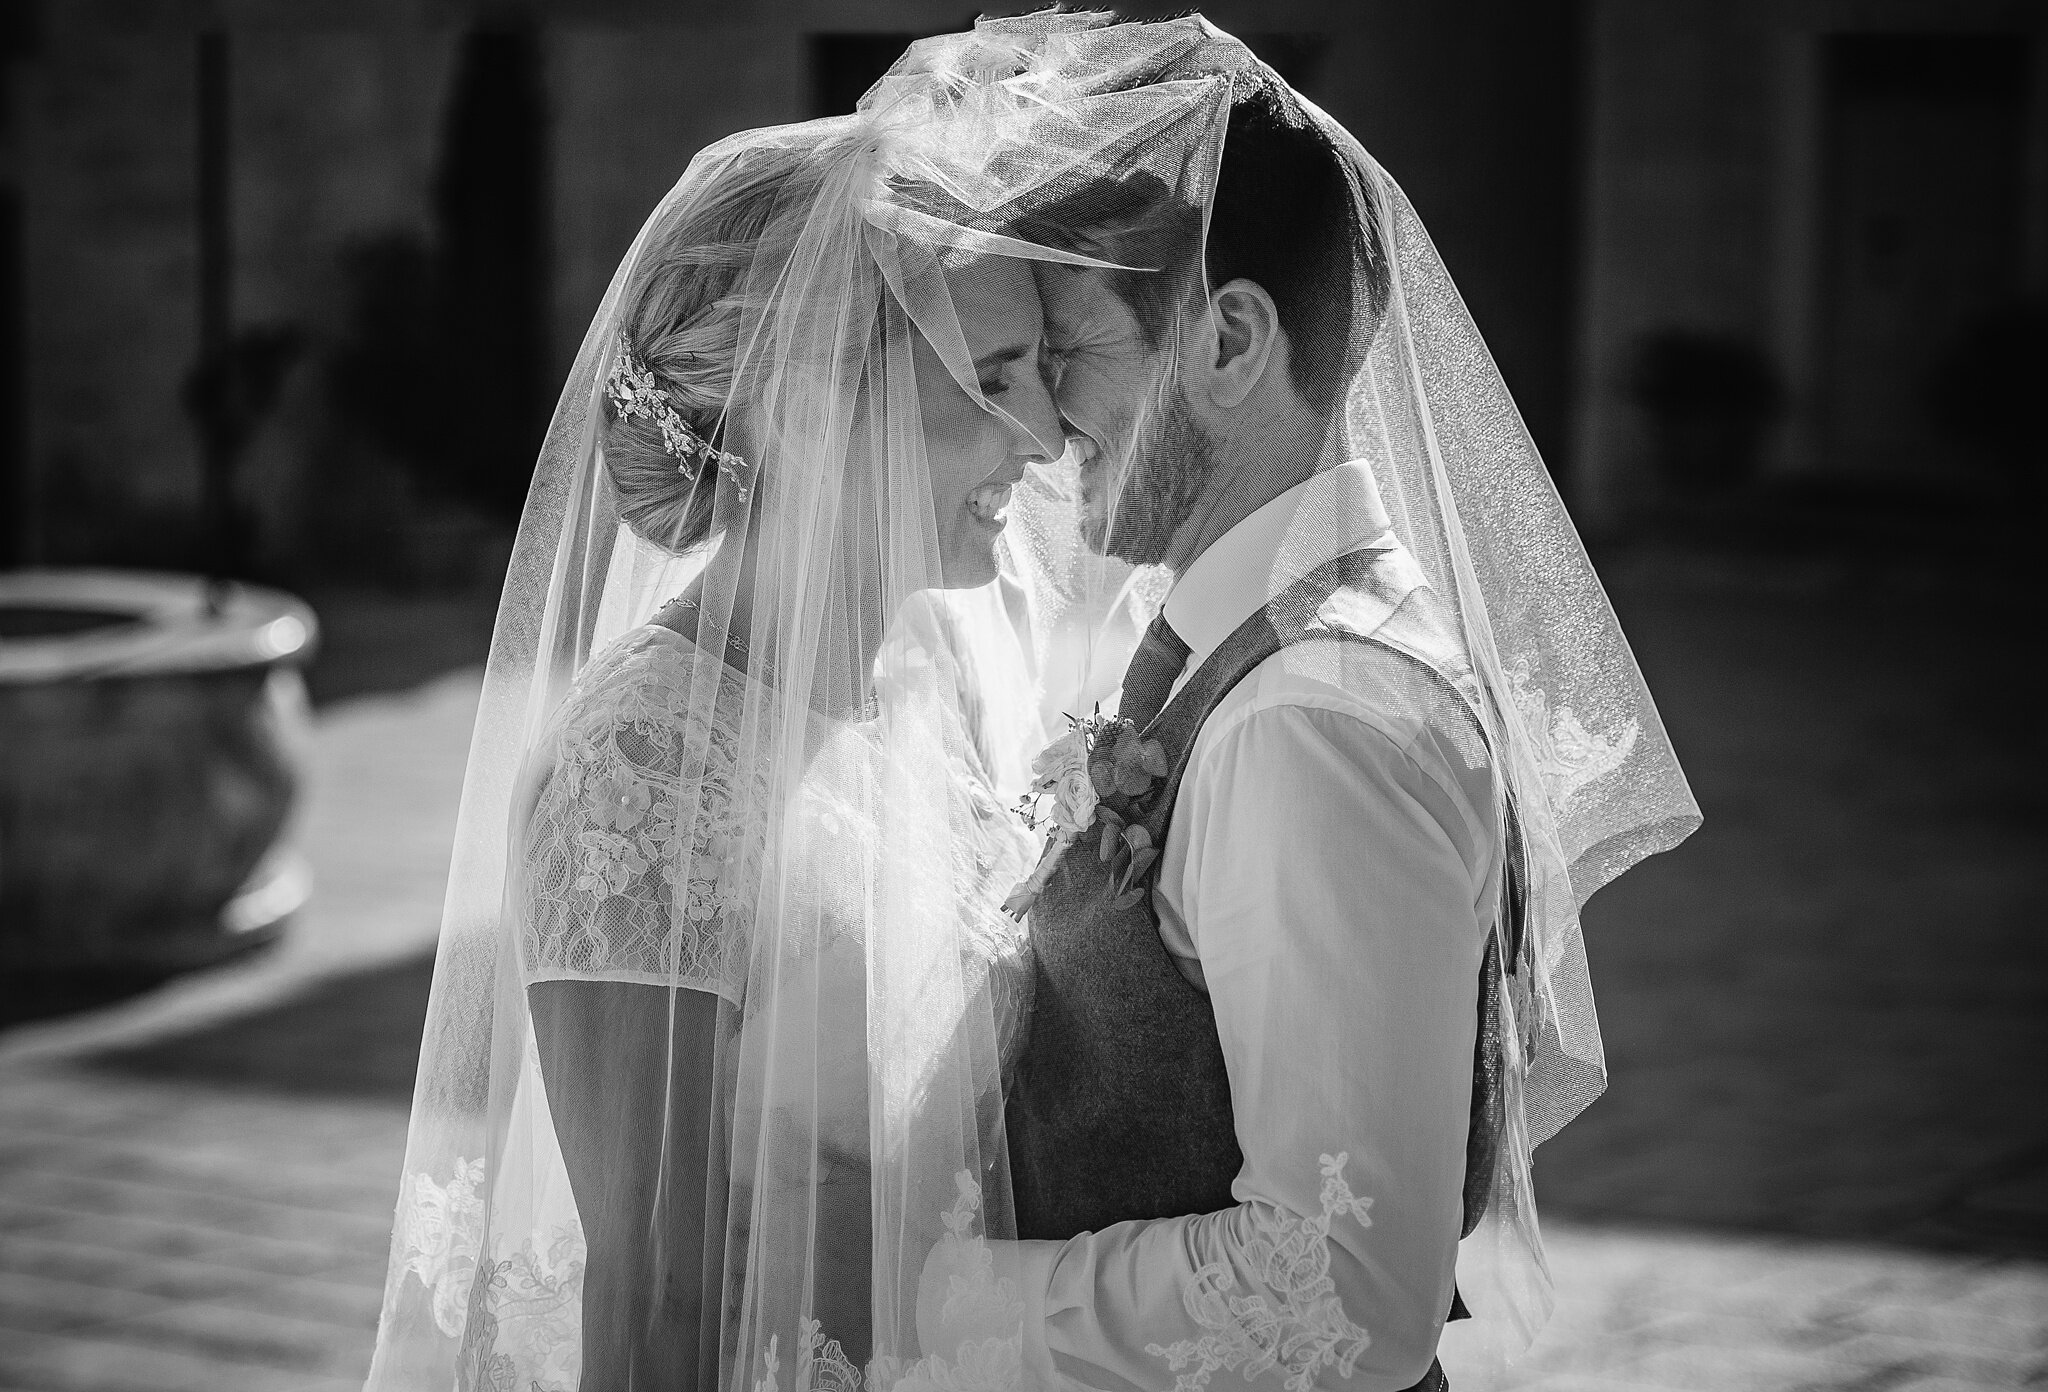 Bride &amp; Groom Photoshoot in Mdina - Wedding Photography Malta - Shane P. Watts Photography